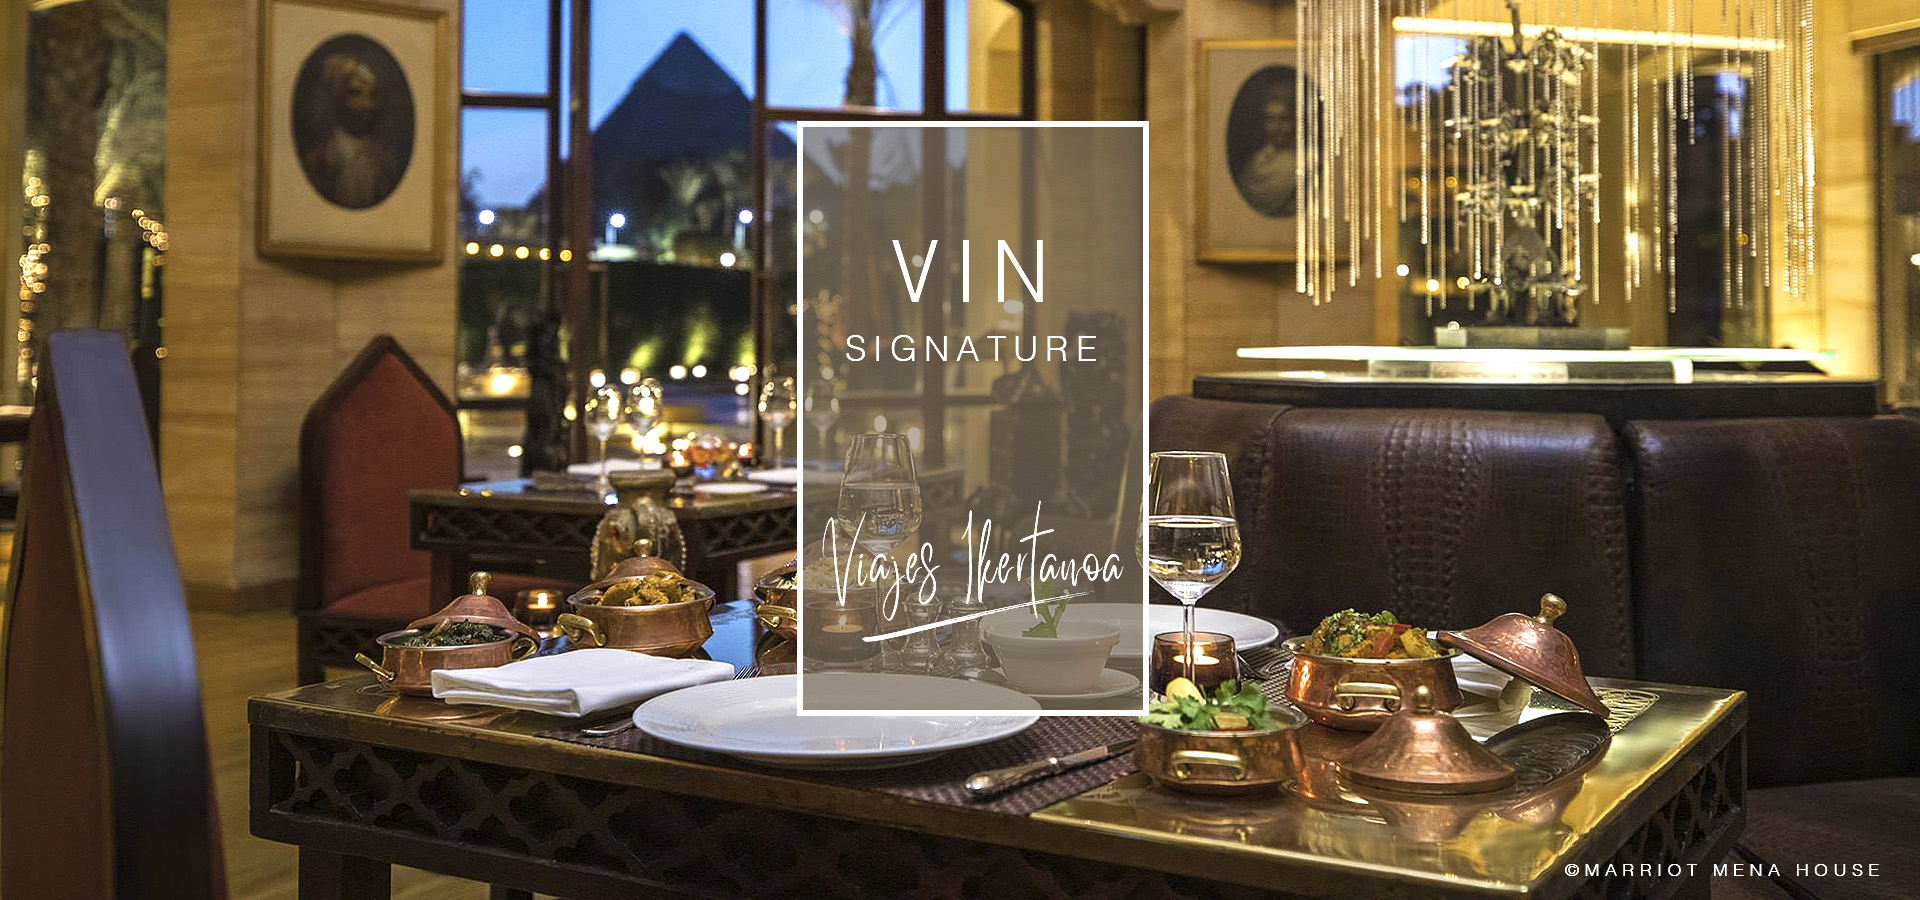 VIN Signature by Viajes Ikertanoa. Marriot Mena House Hotel, en el Cairo.